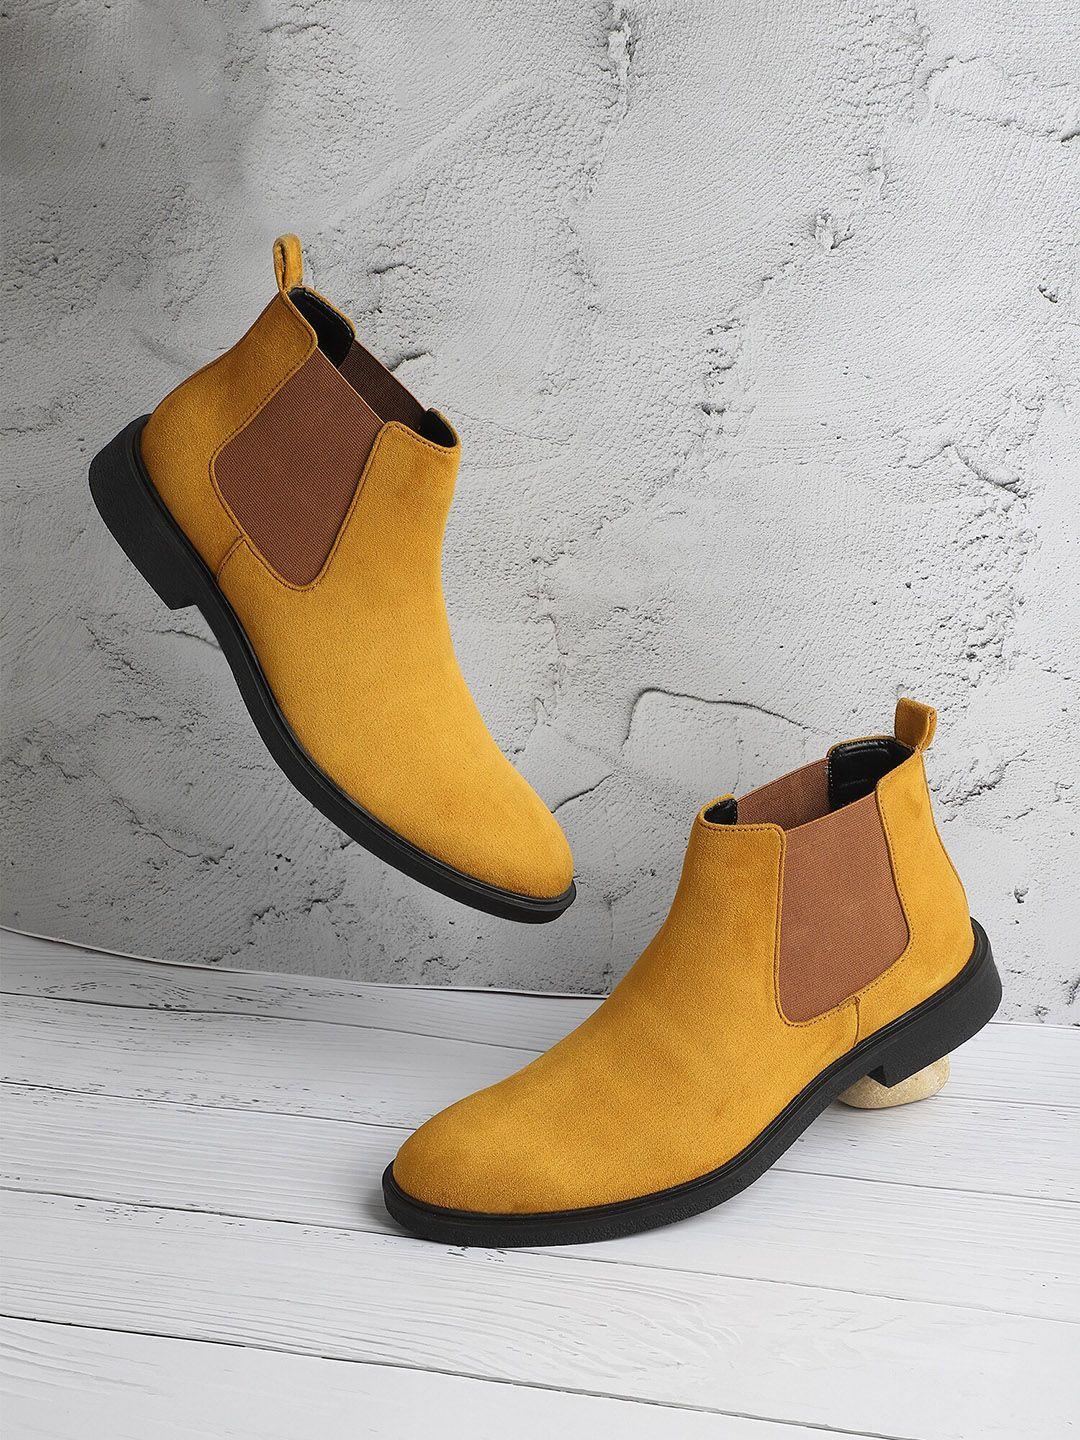 carlton london men mustard yellow solid chelsea boots